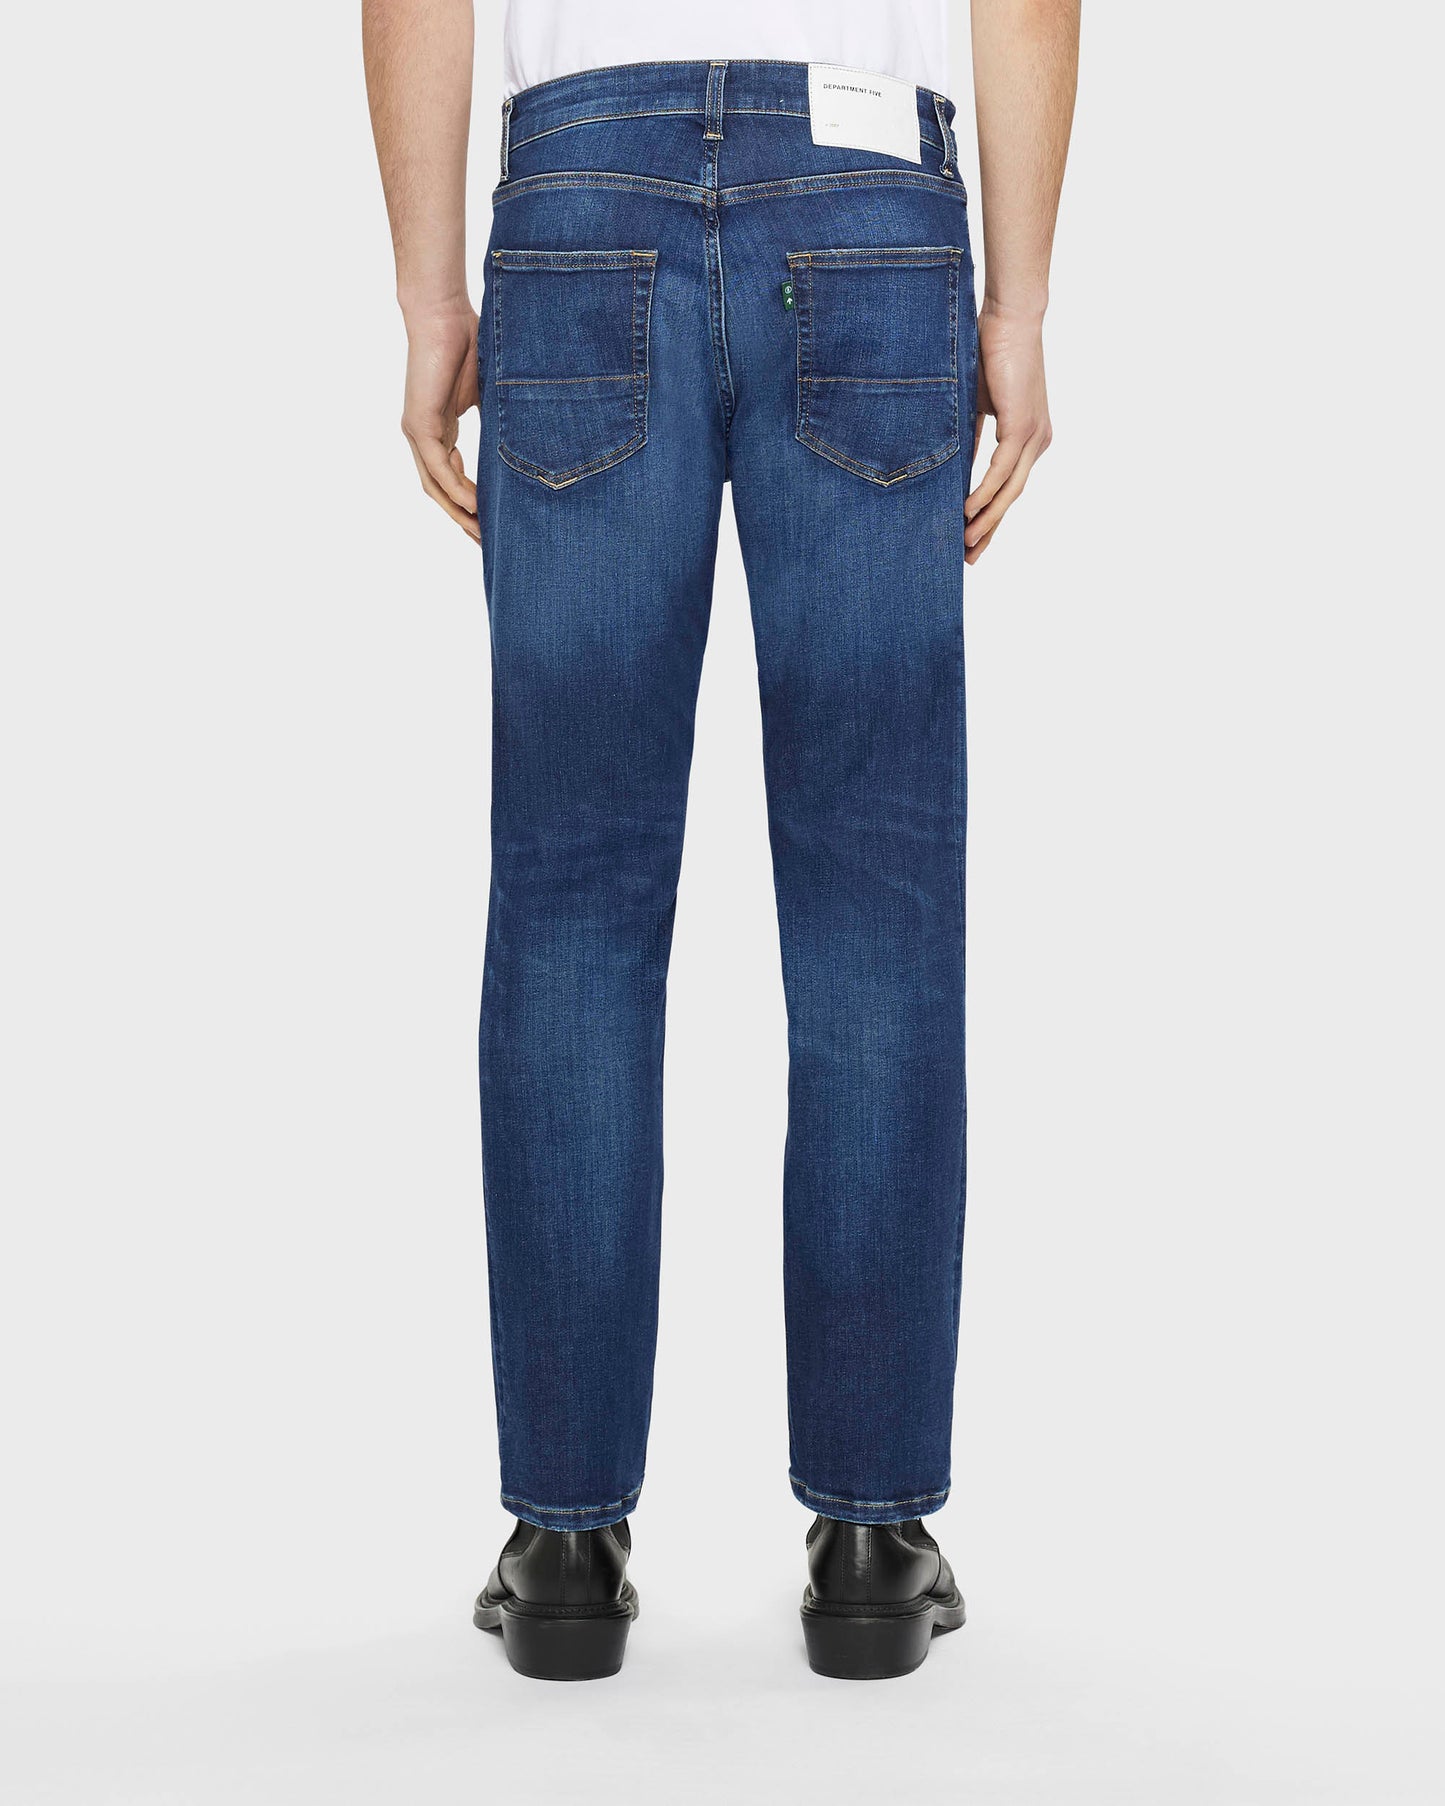 Corkey jeans regular-fit crop